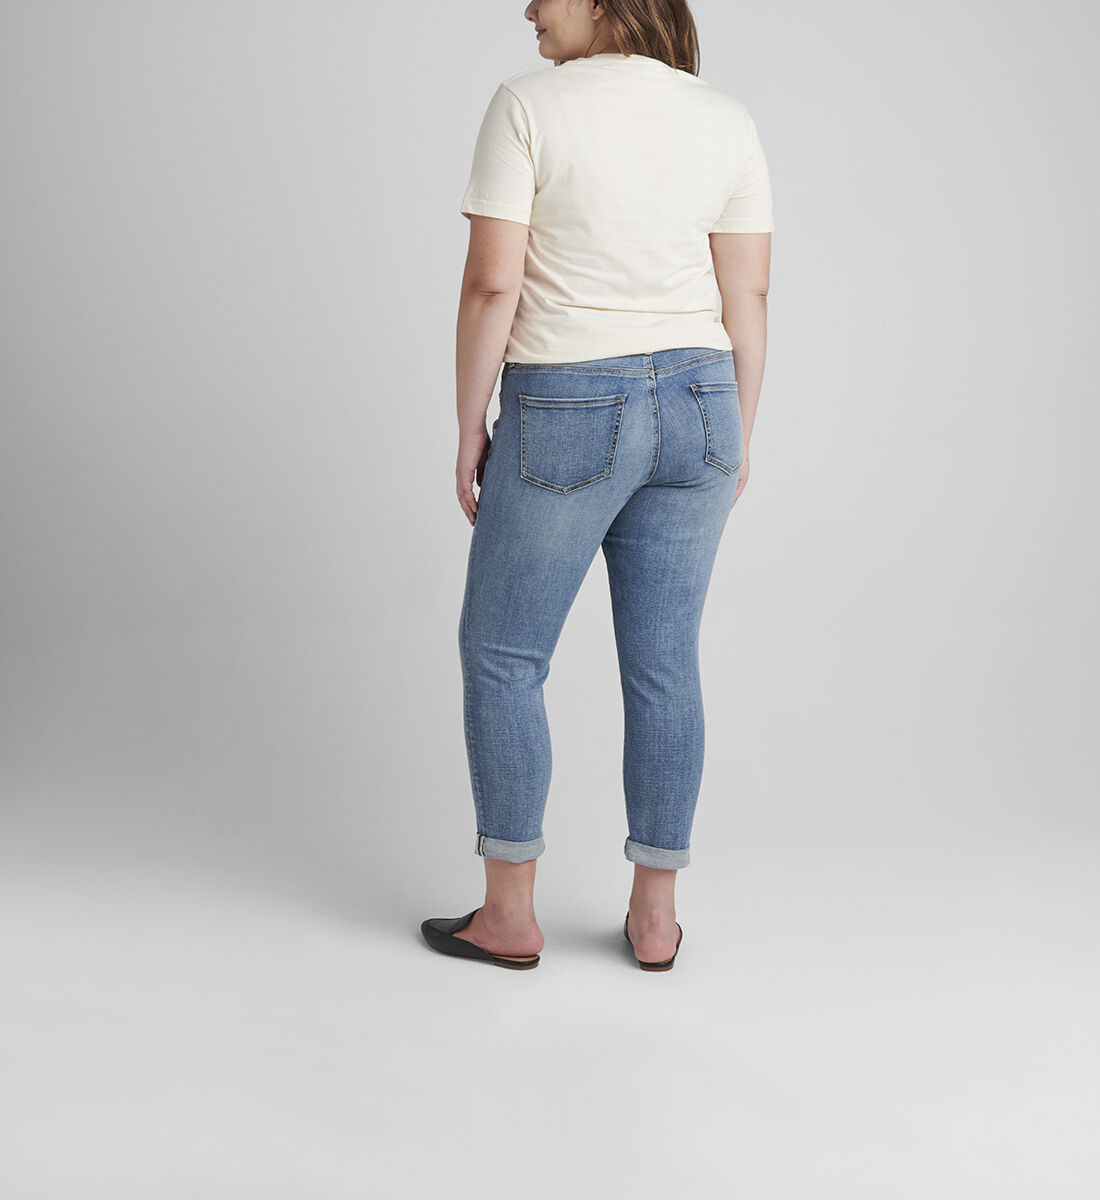 Carter Mid Rise Girlfriend Jeans Plus Size Back